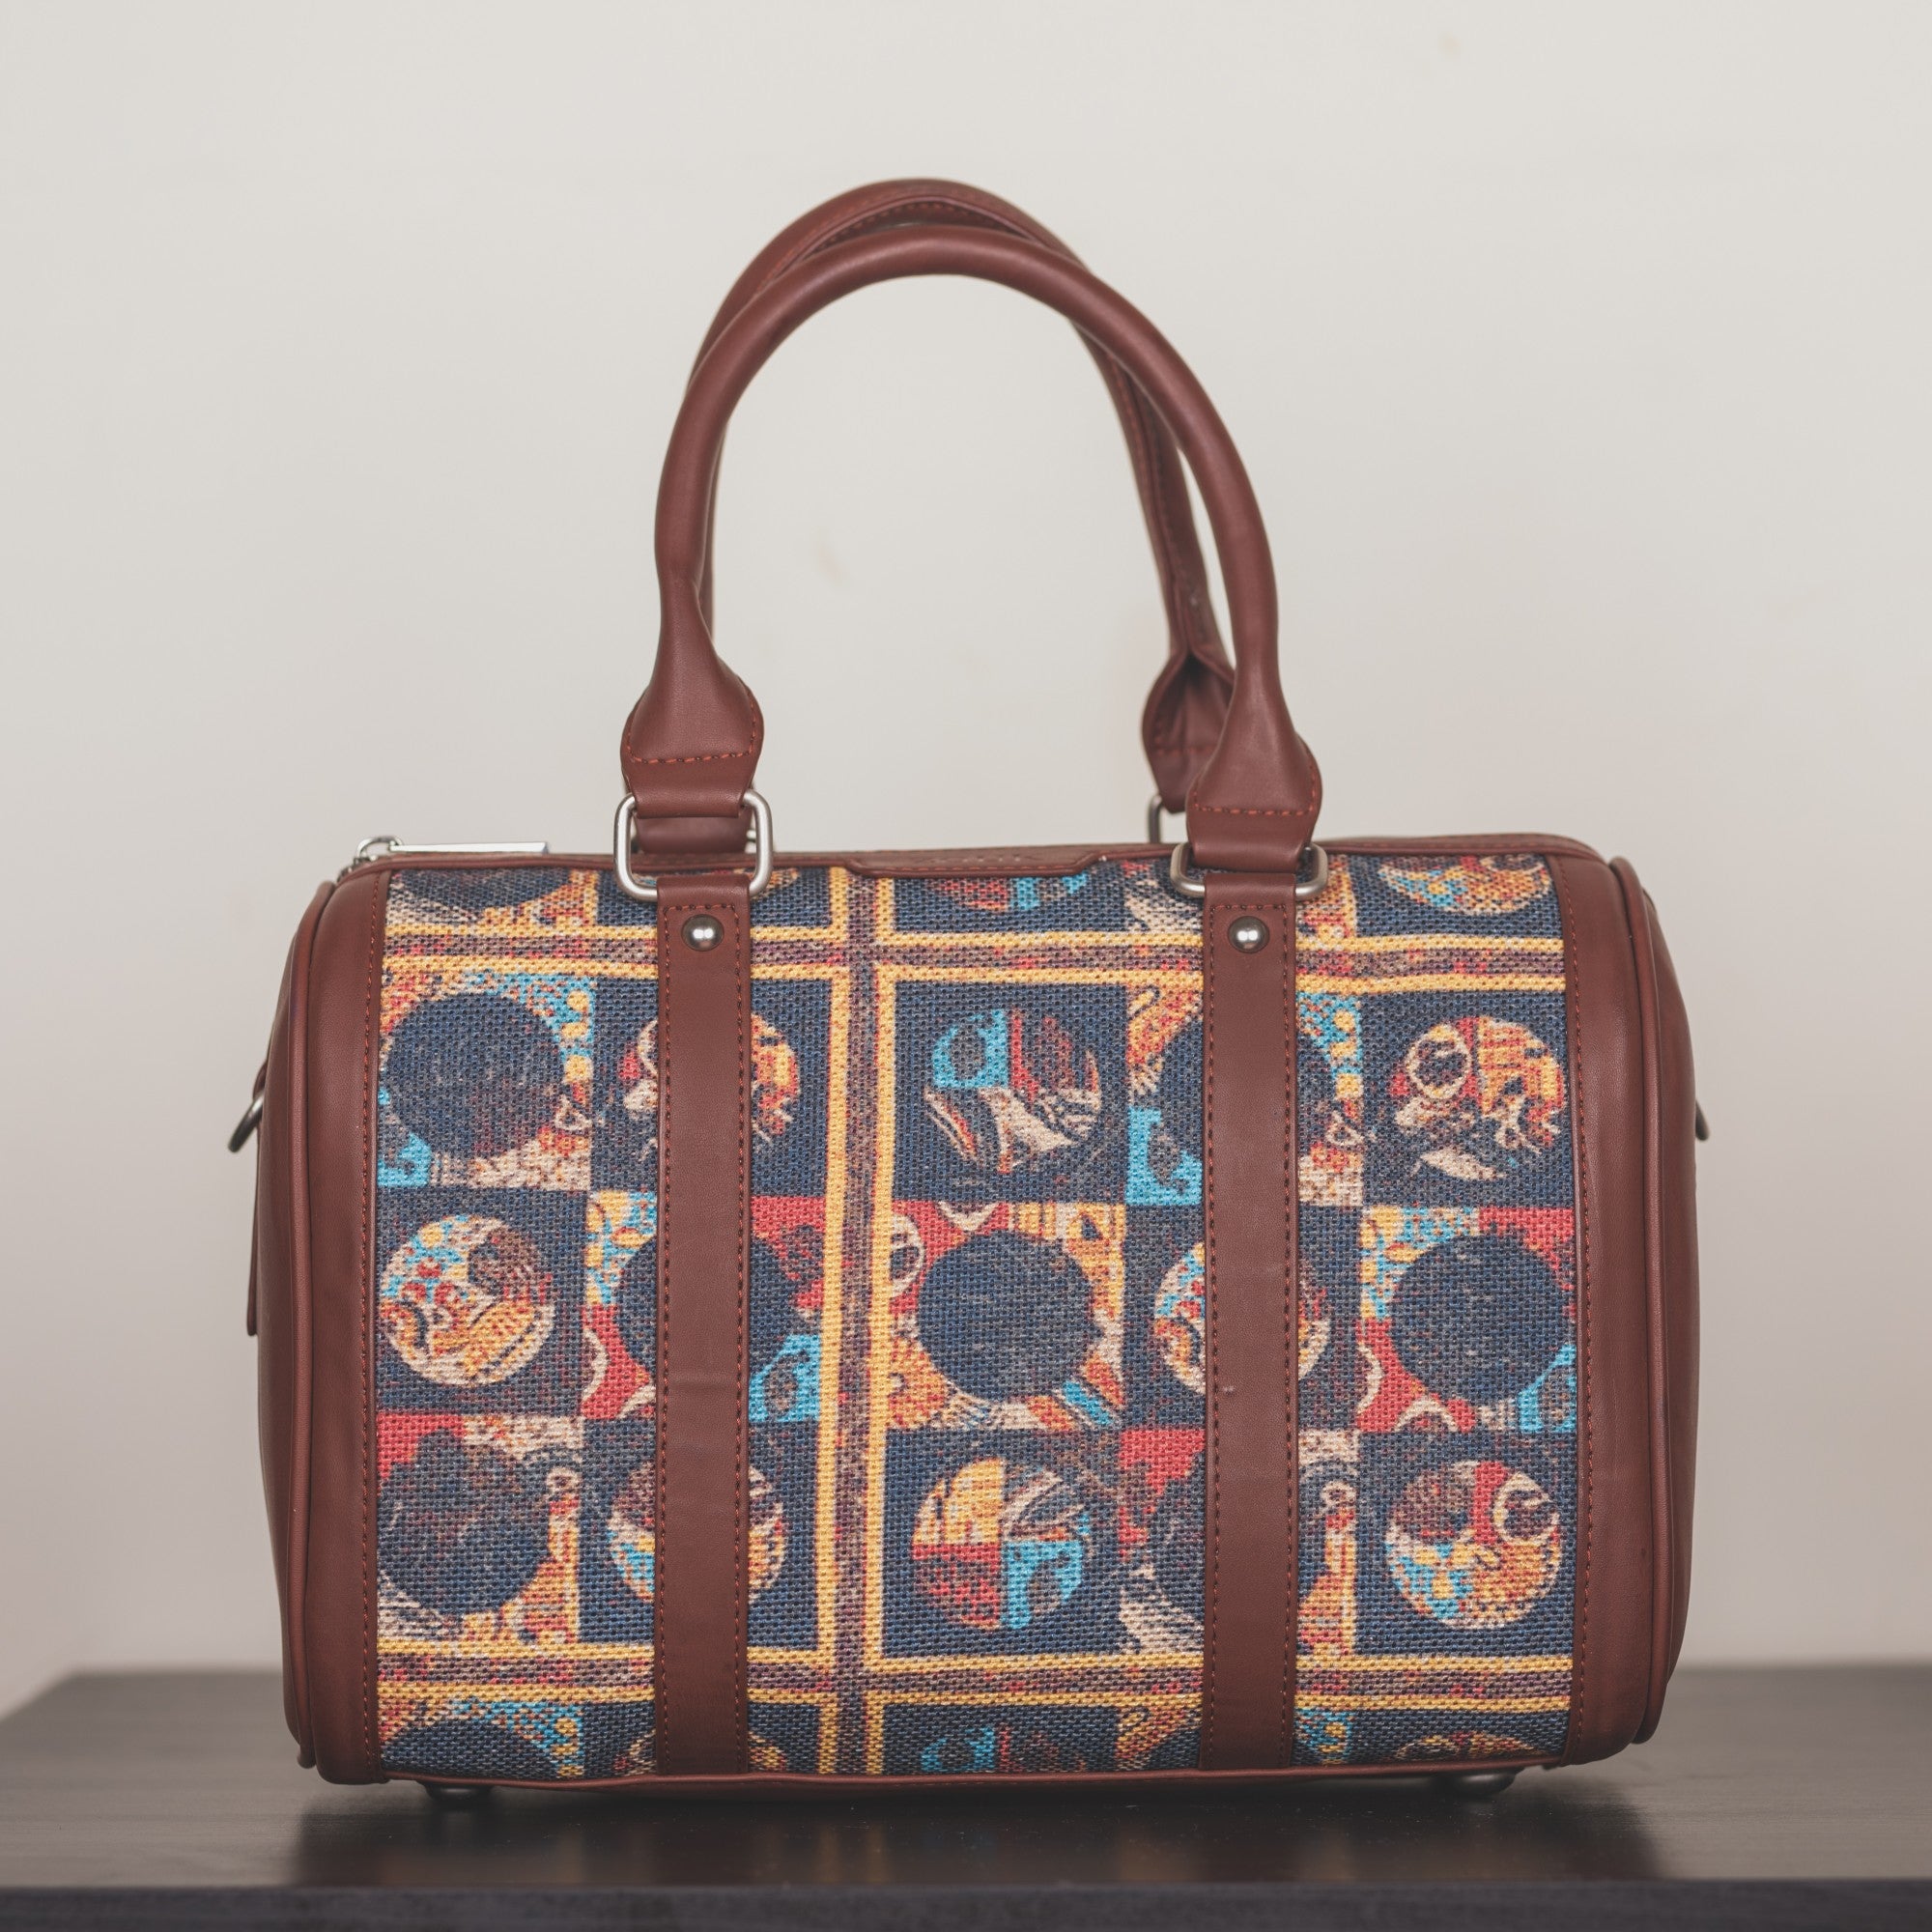 Zouk African Art Handbag - Front view without shoulder strap